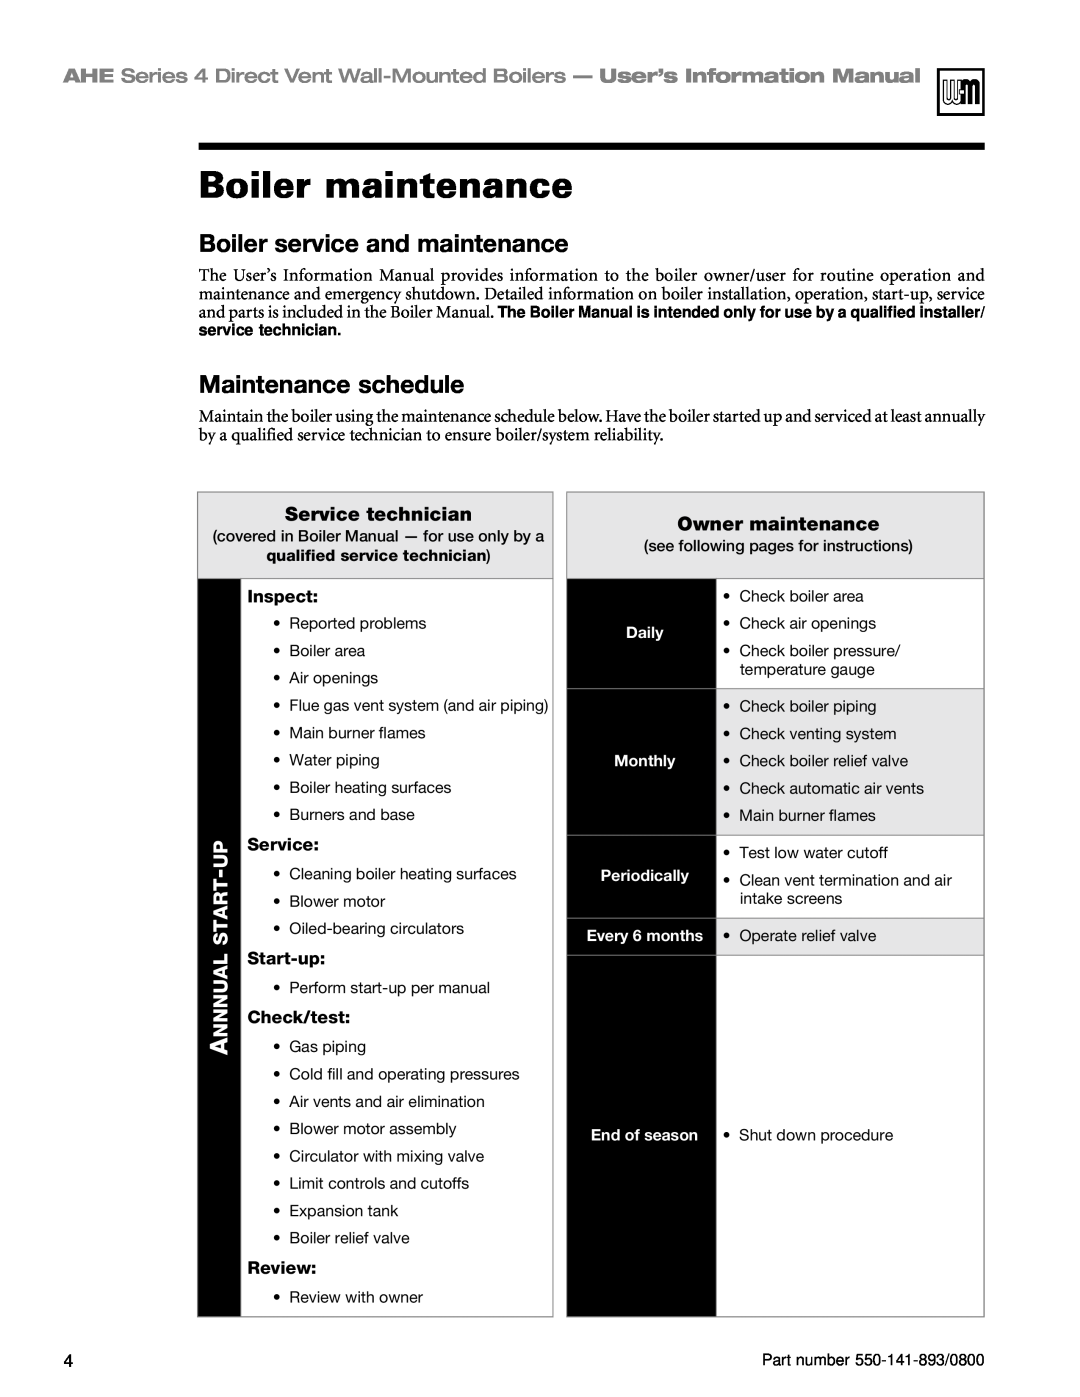 Honeywell Series 4 manual Boiler maintenance, Boiler service and maintenance, Maintenance schedule, Service technician 